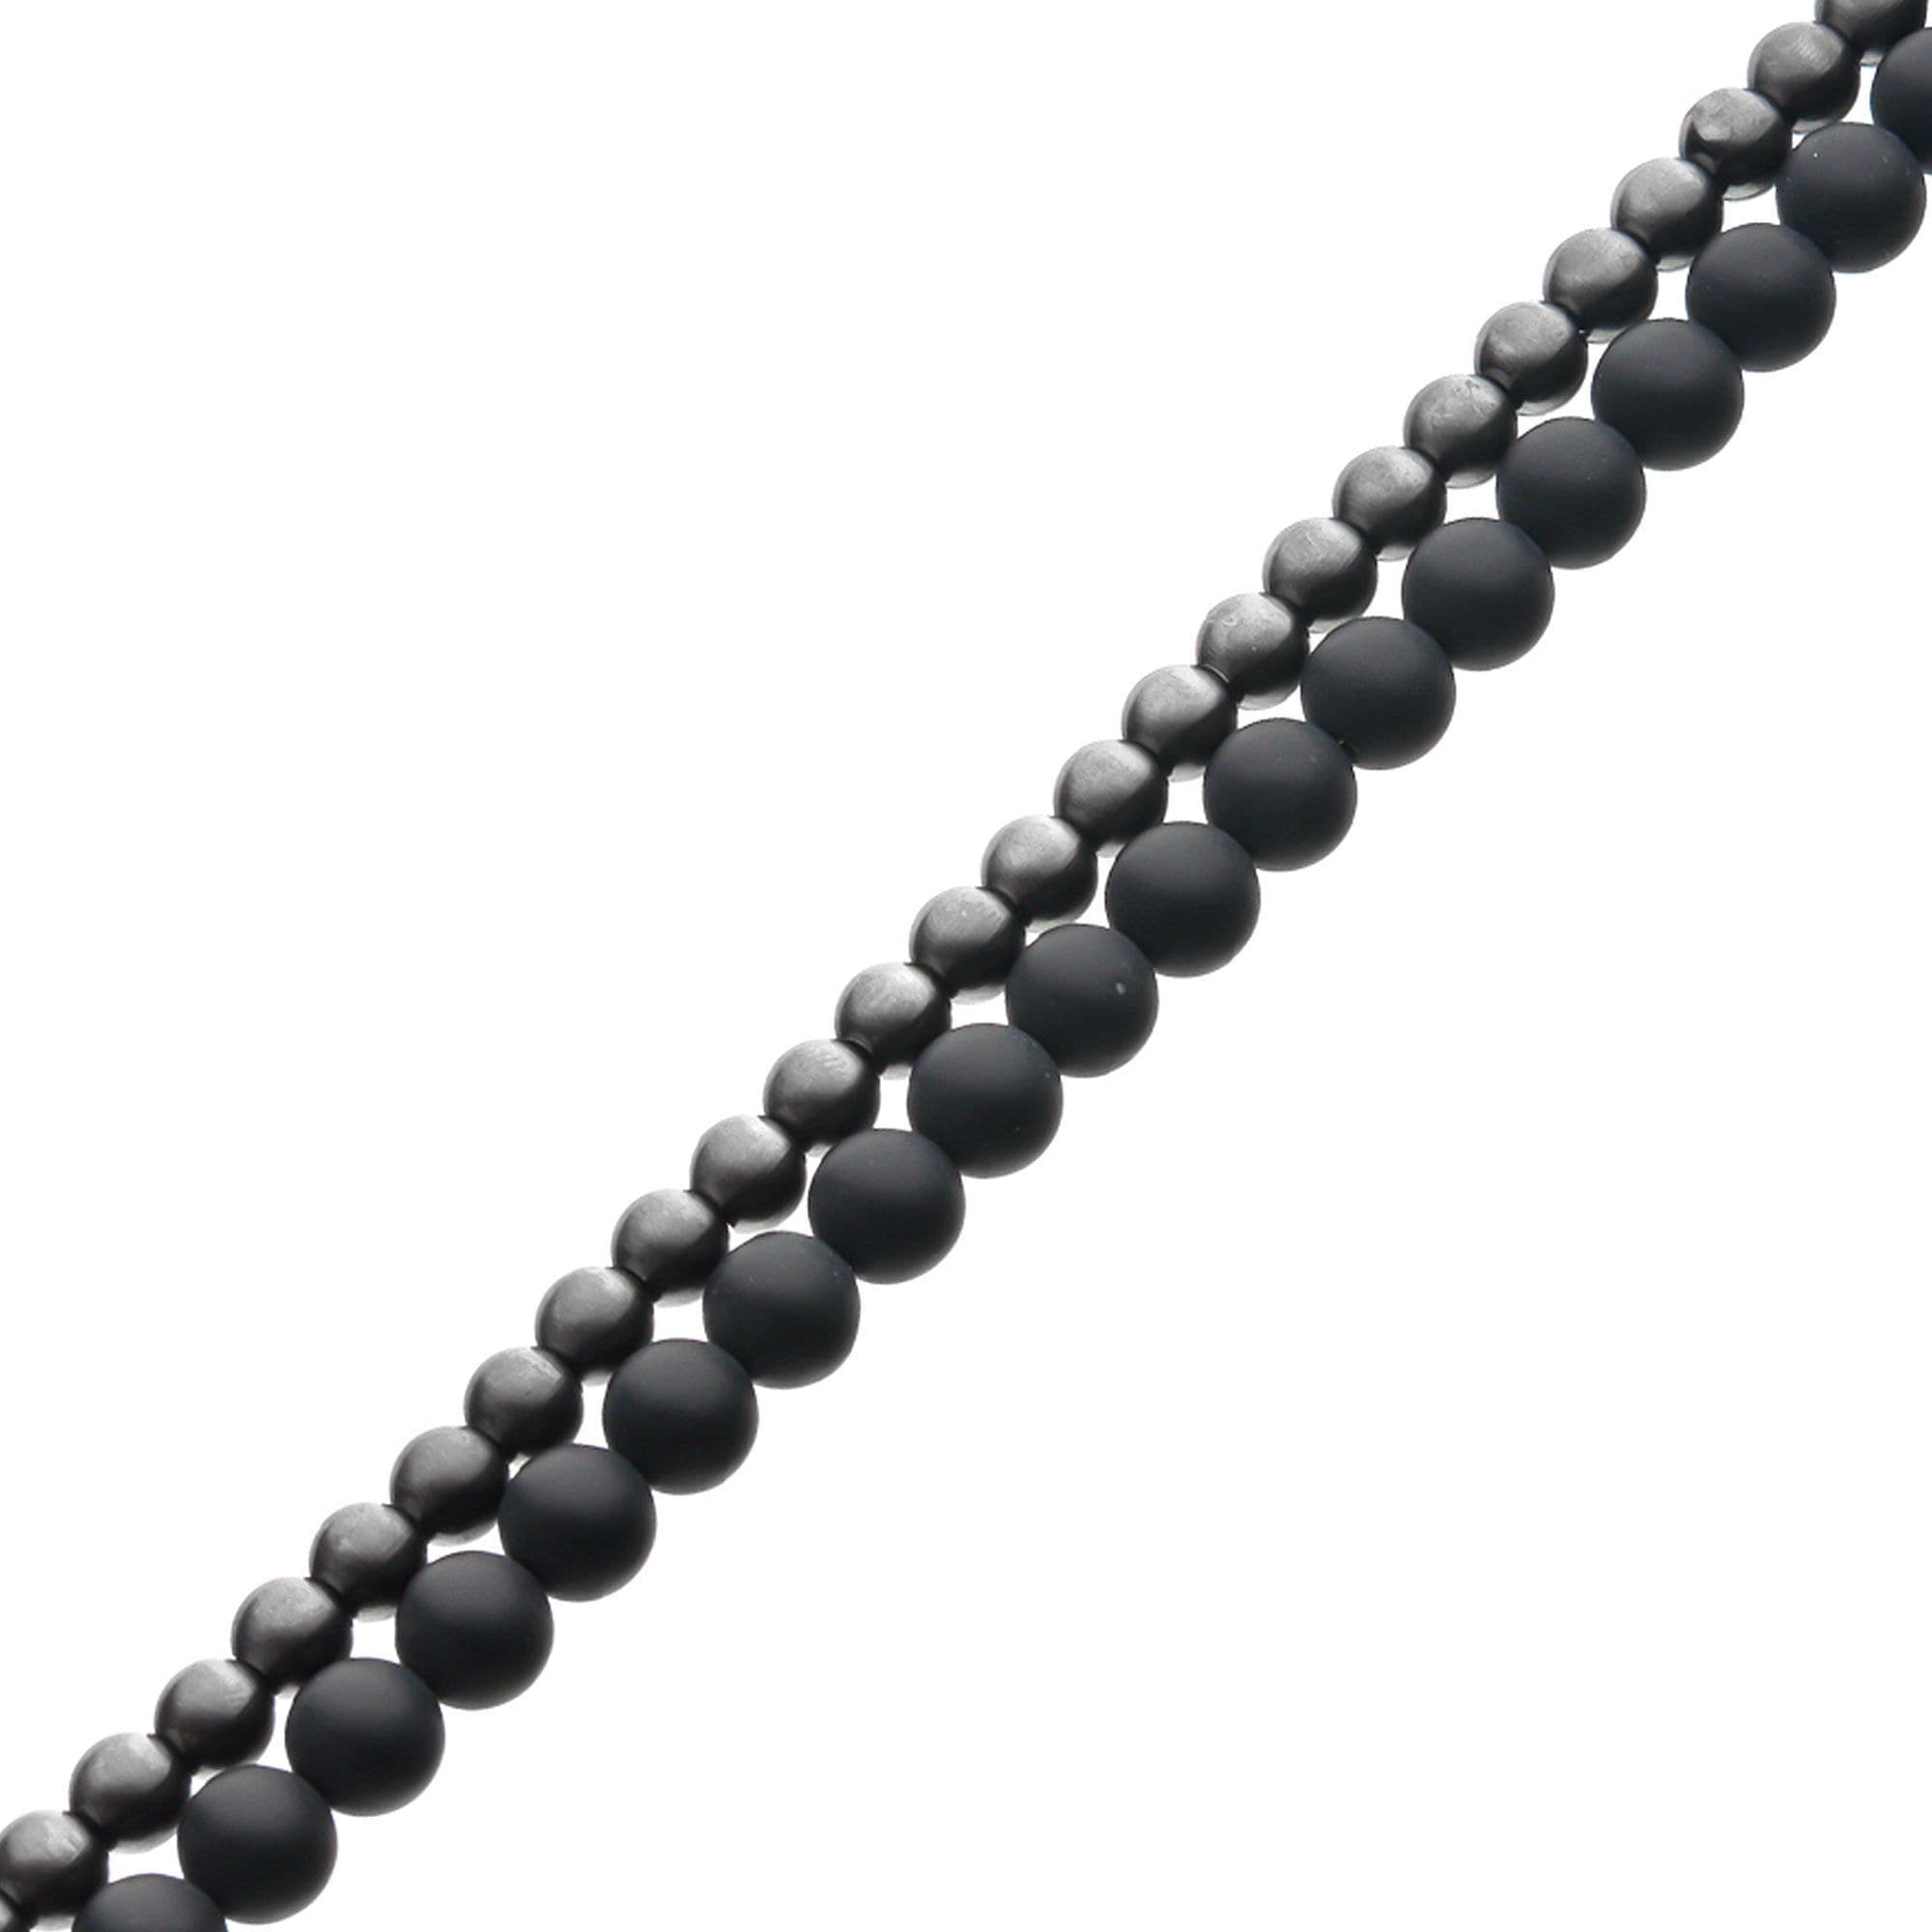 Inox jewellery - Dobbelt Perle - br30000gn - armring.dk - Armbånd